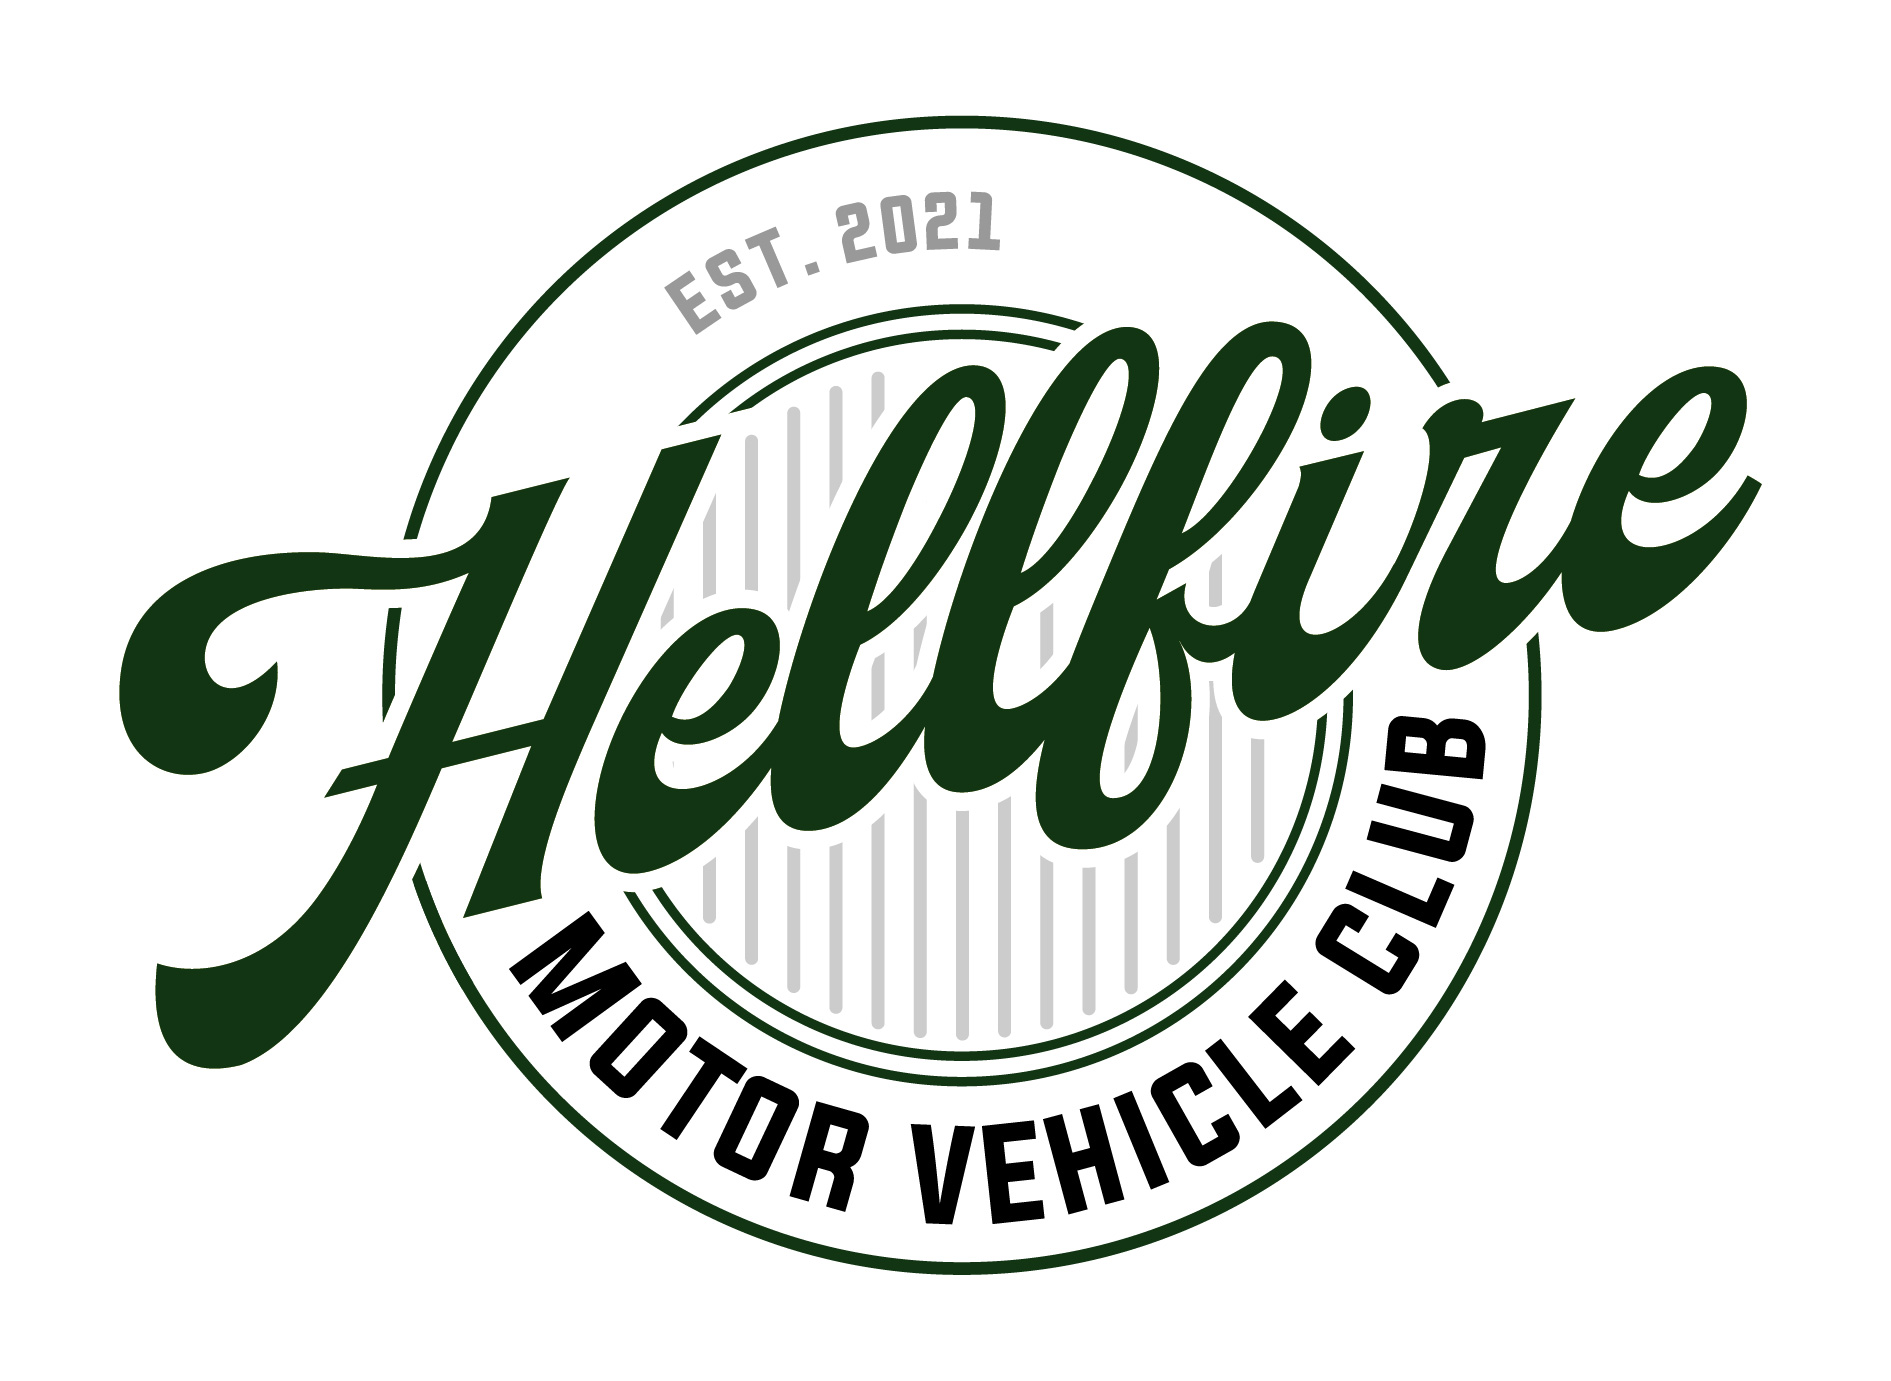 Hellfire Motor Vehicle Club